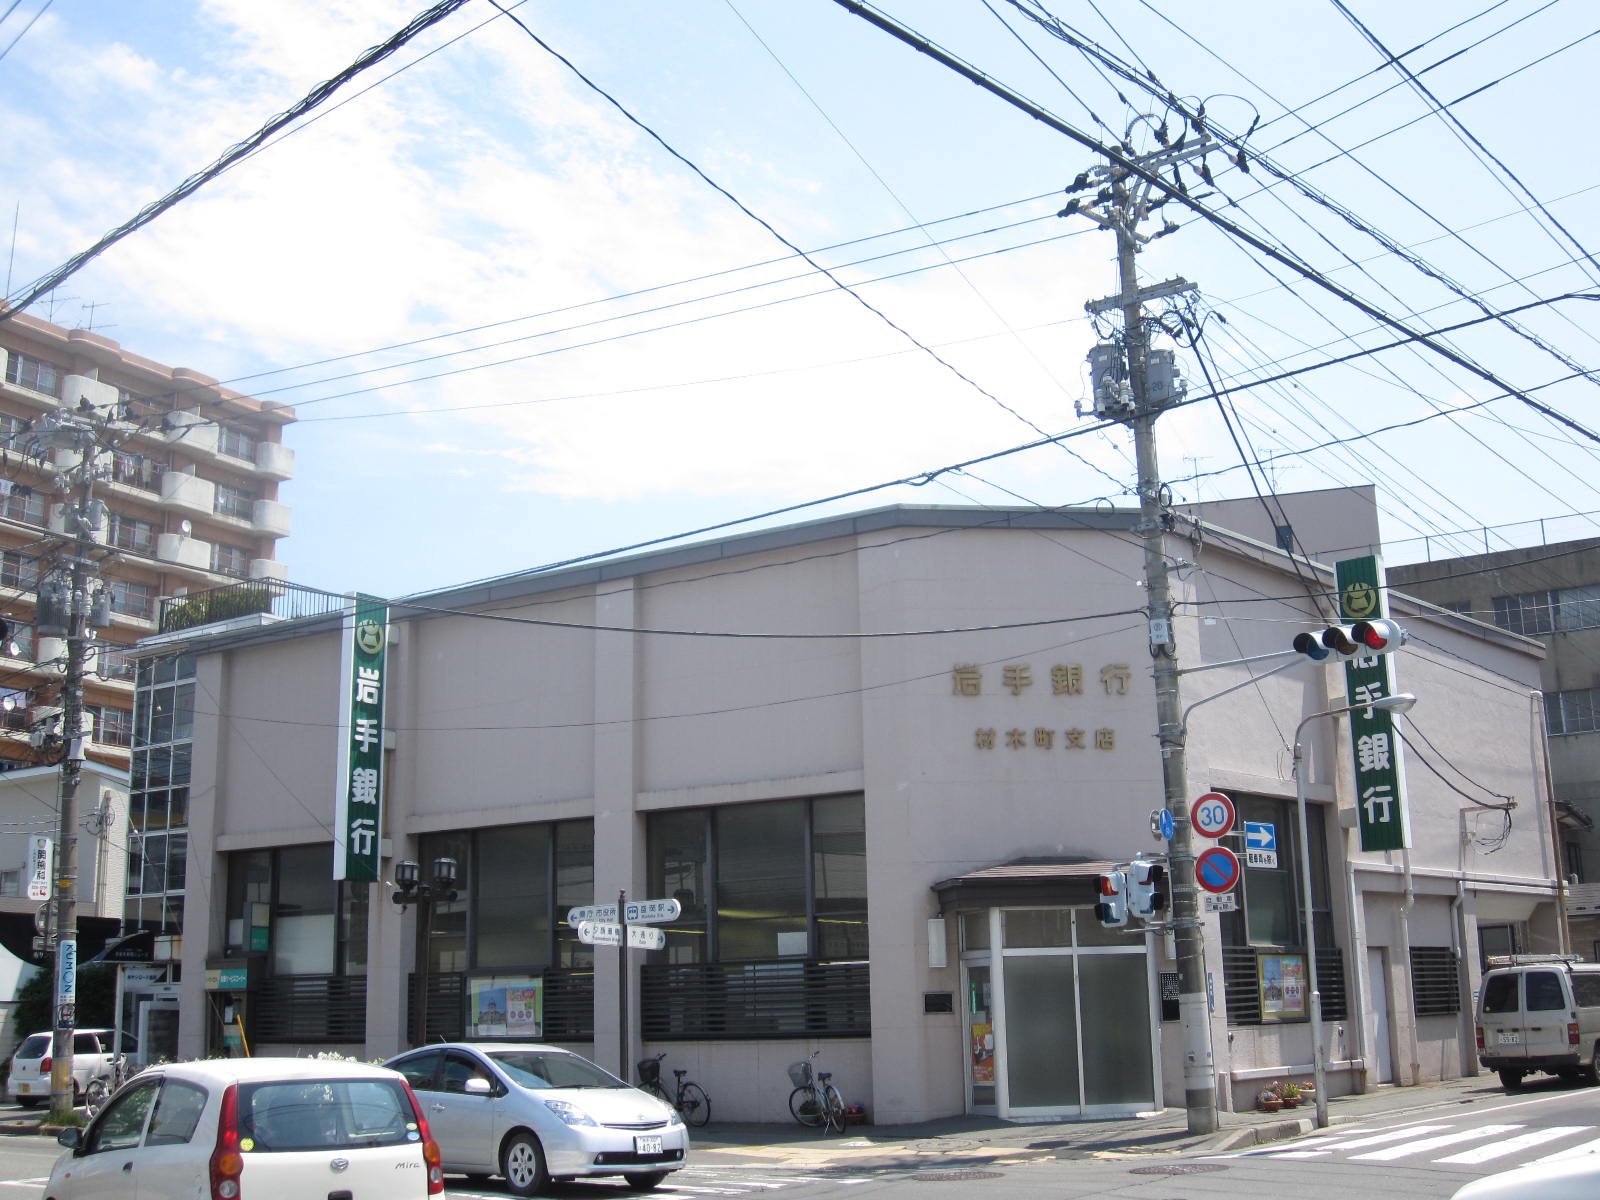 Bank. 306m to Iwate timber-machi Branch (Bank)